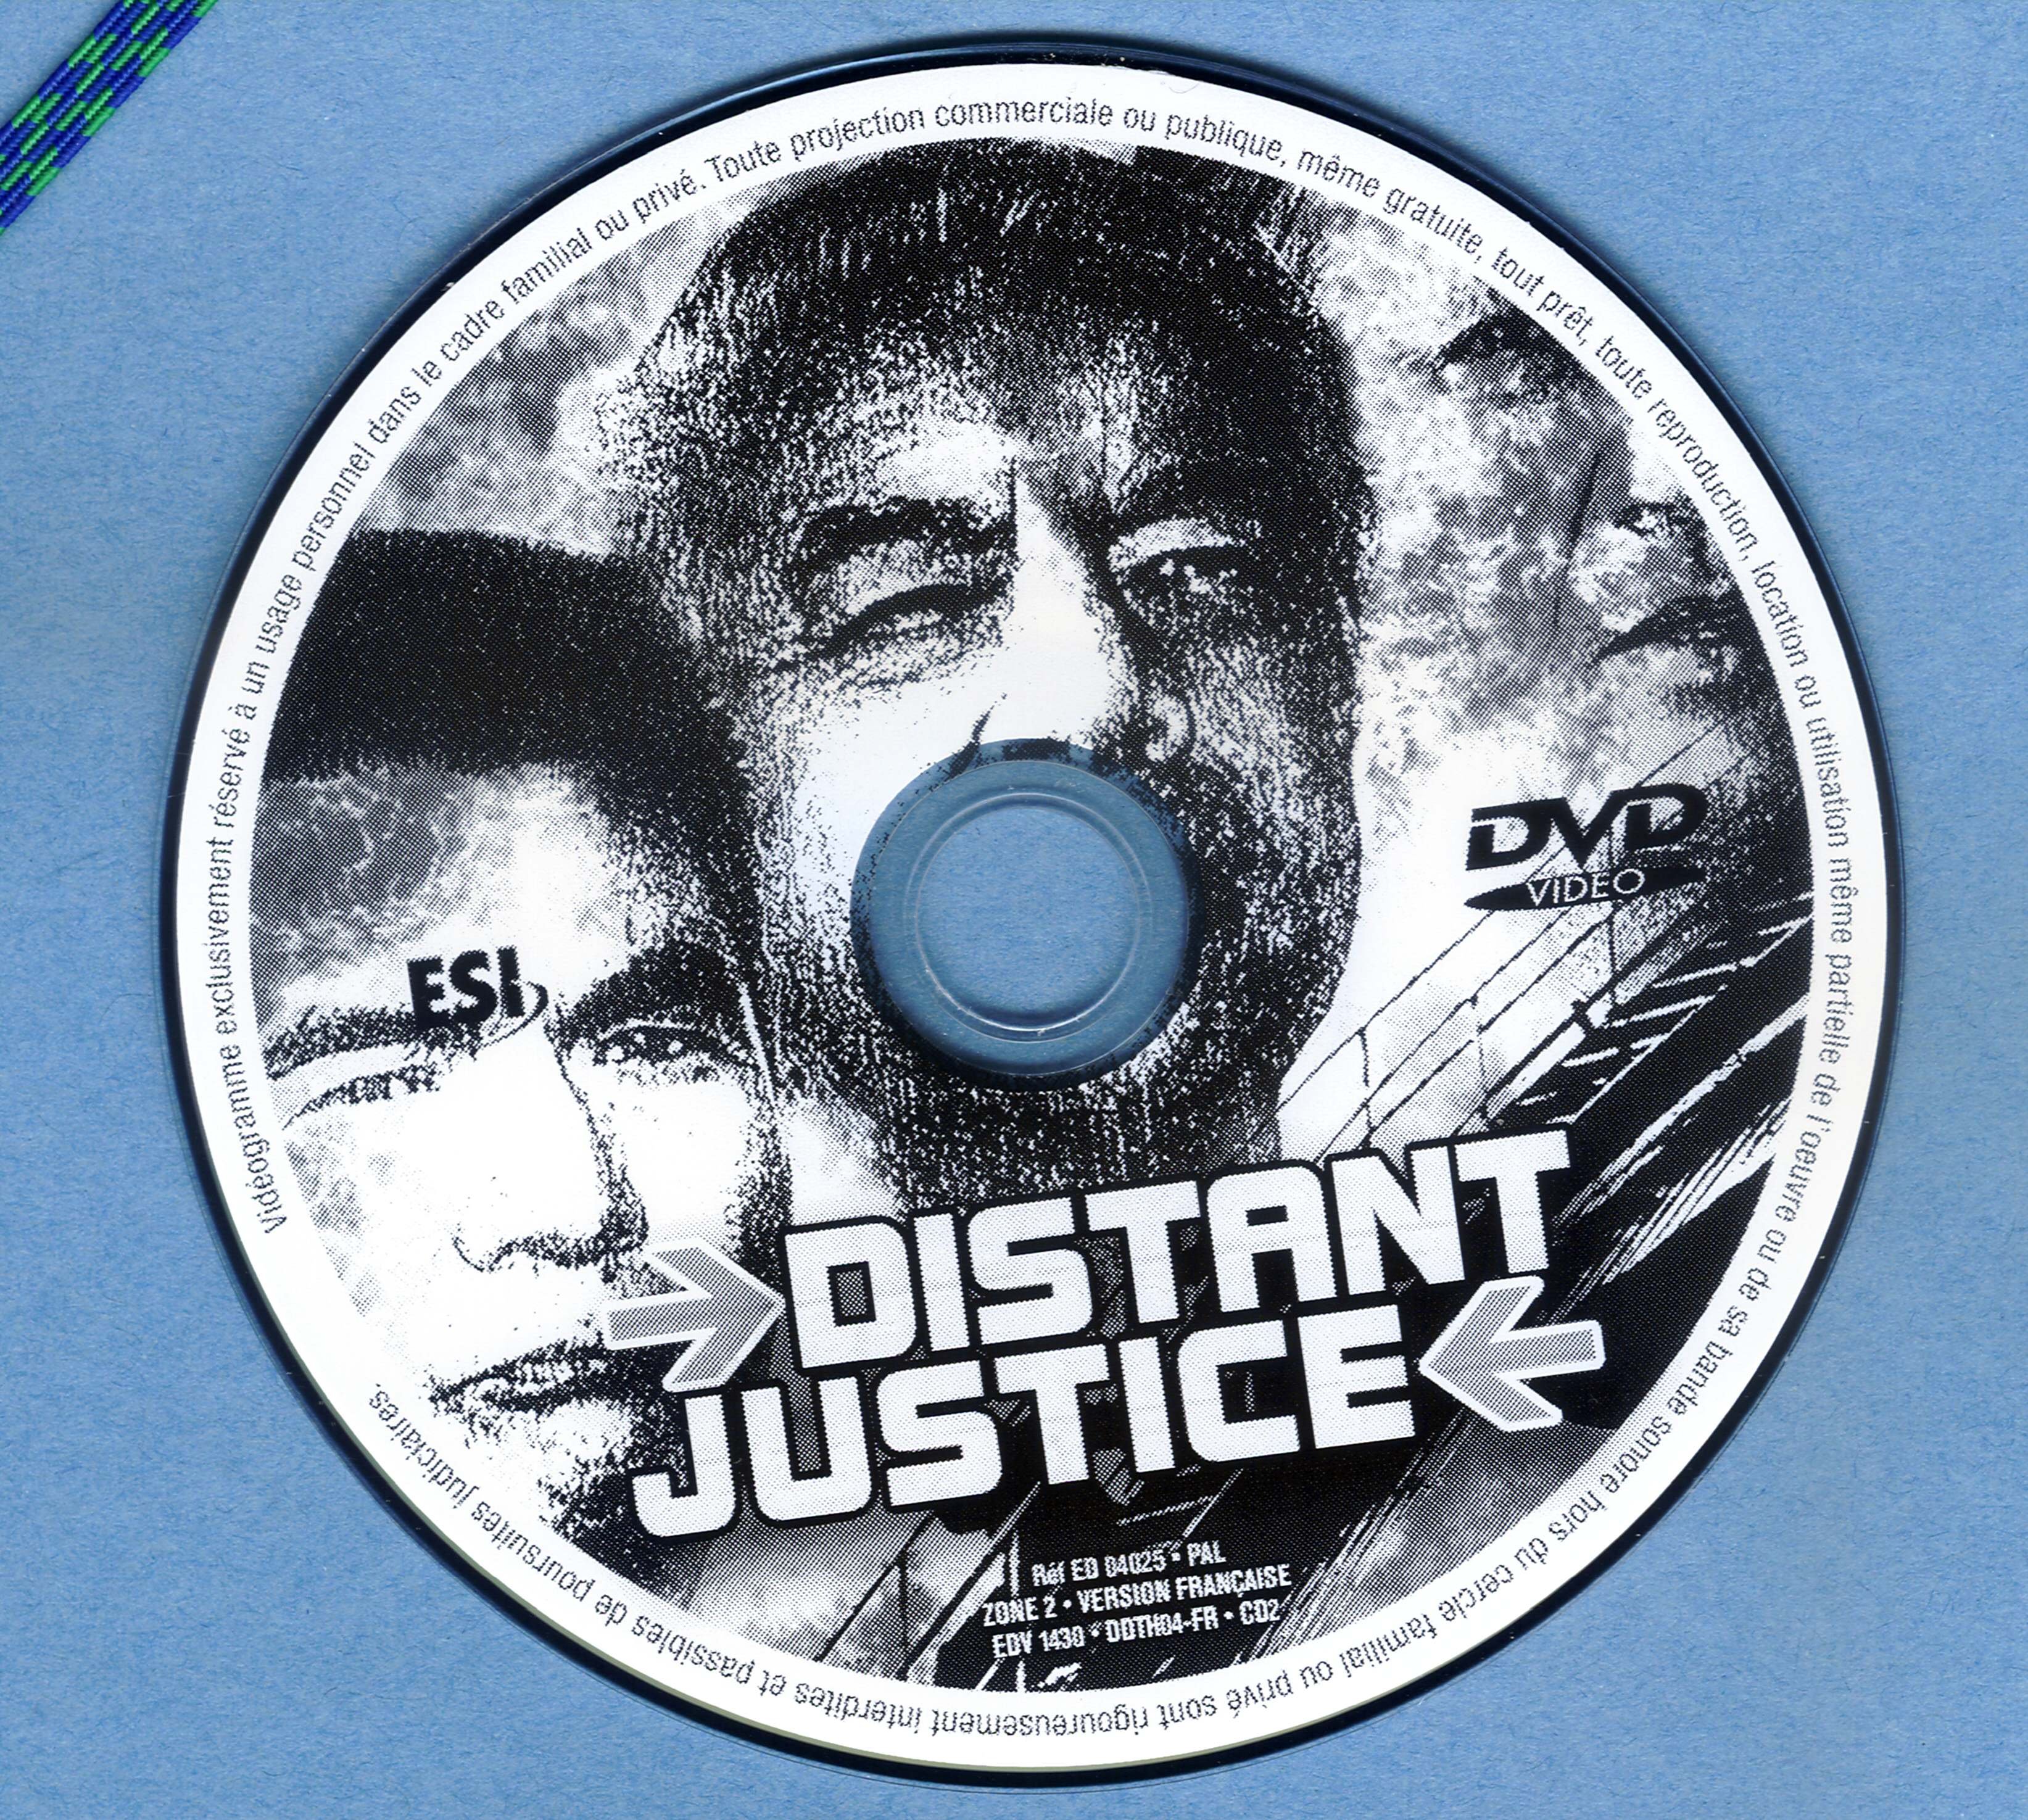 Distant justice